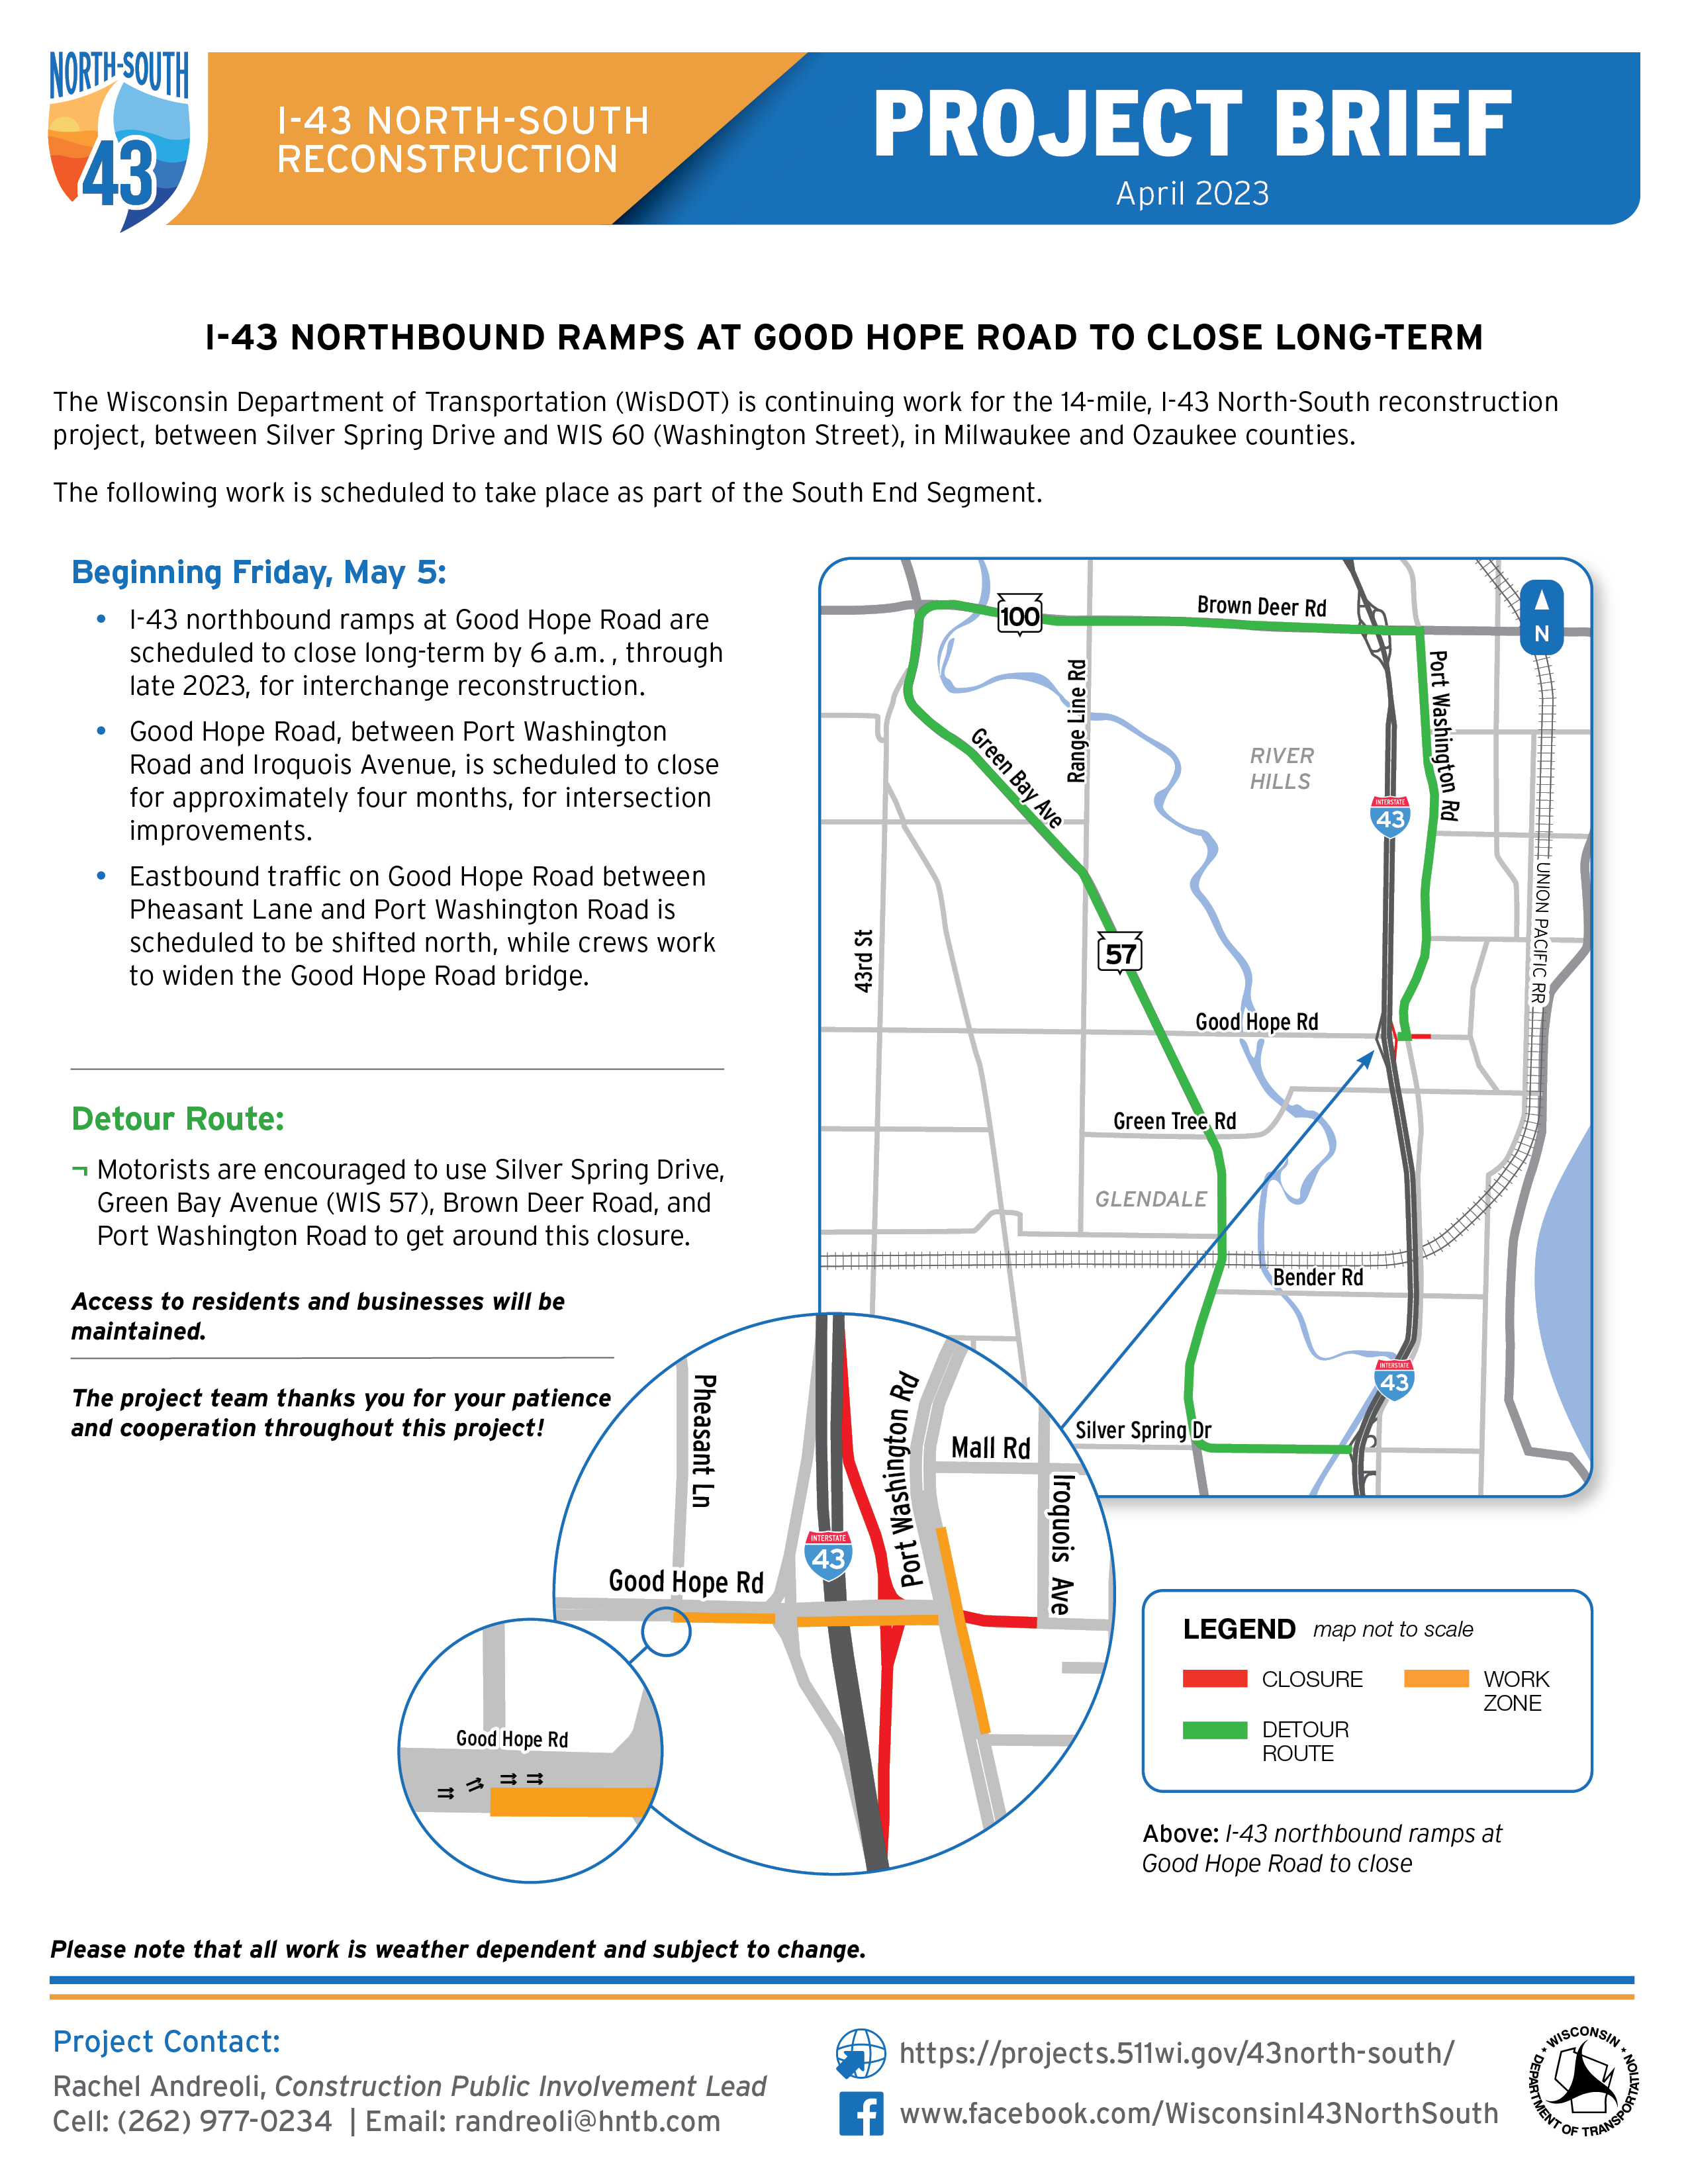 May 6, I-43 Northbound Ramps at Good Hope Road to Close Long-Term